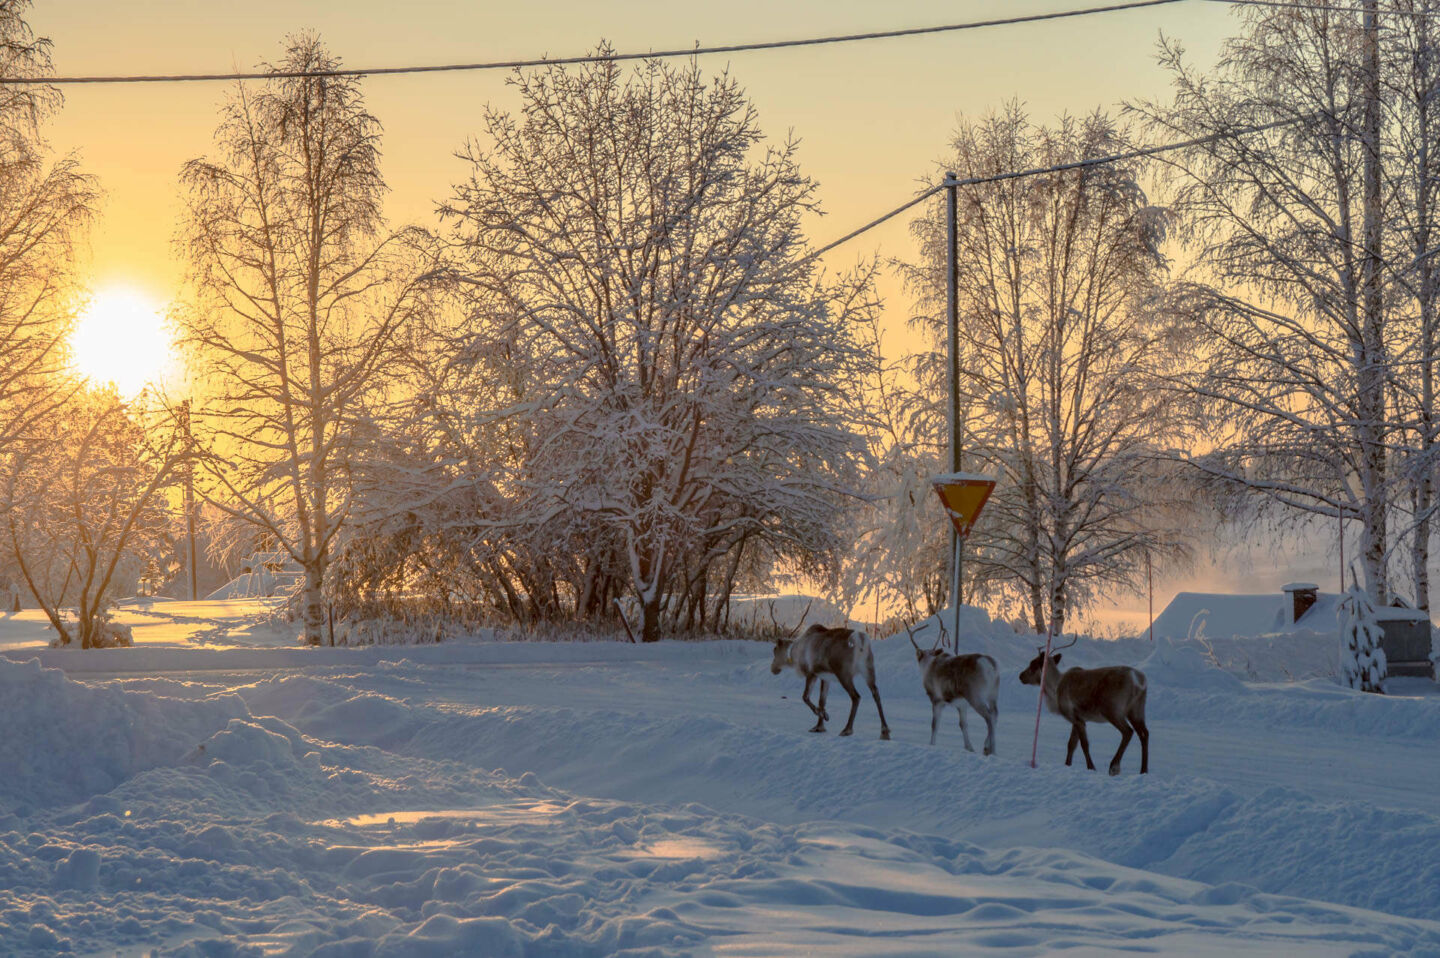 Reindeer walking in the street in Savukoski, Finland in winter